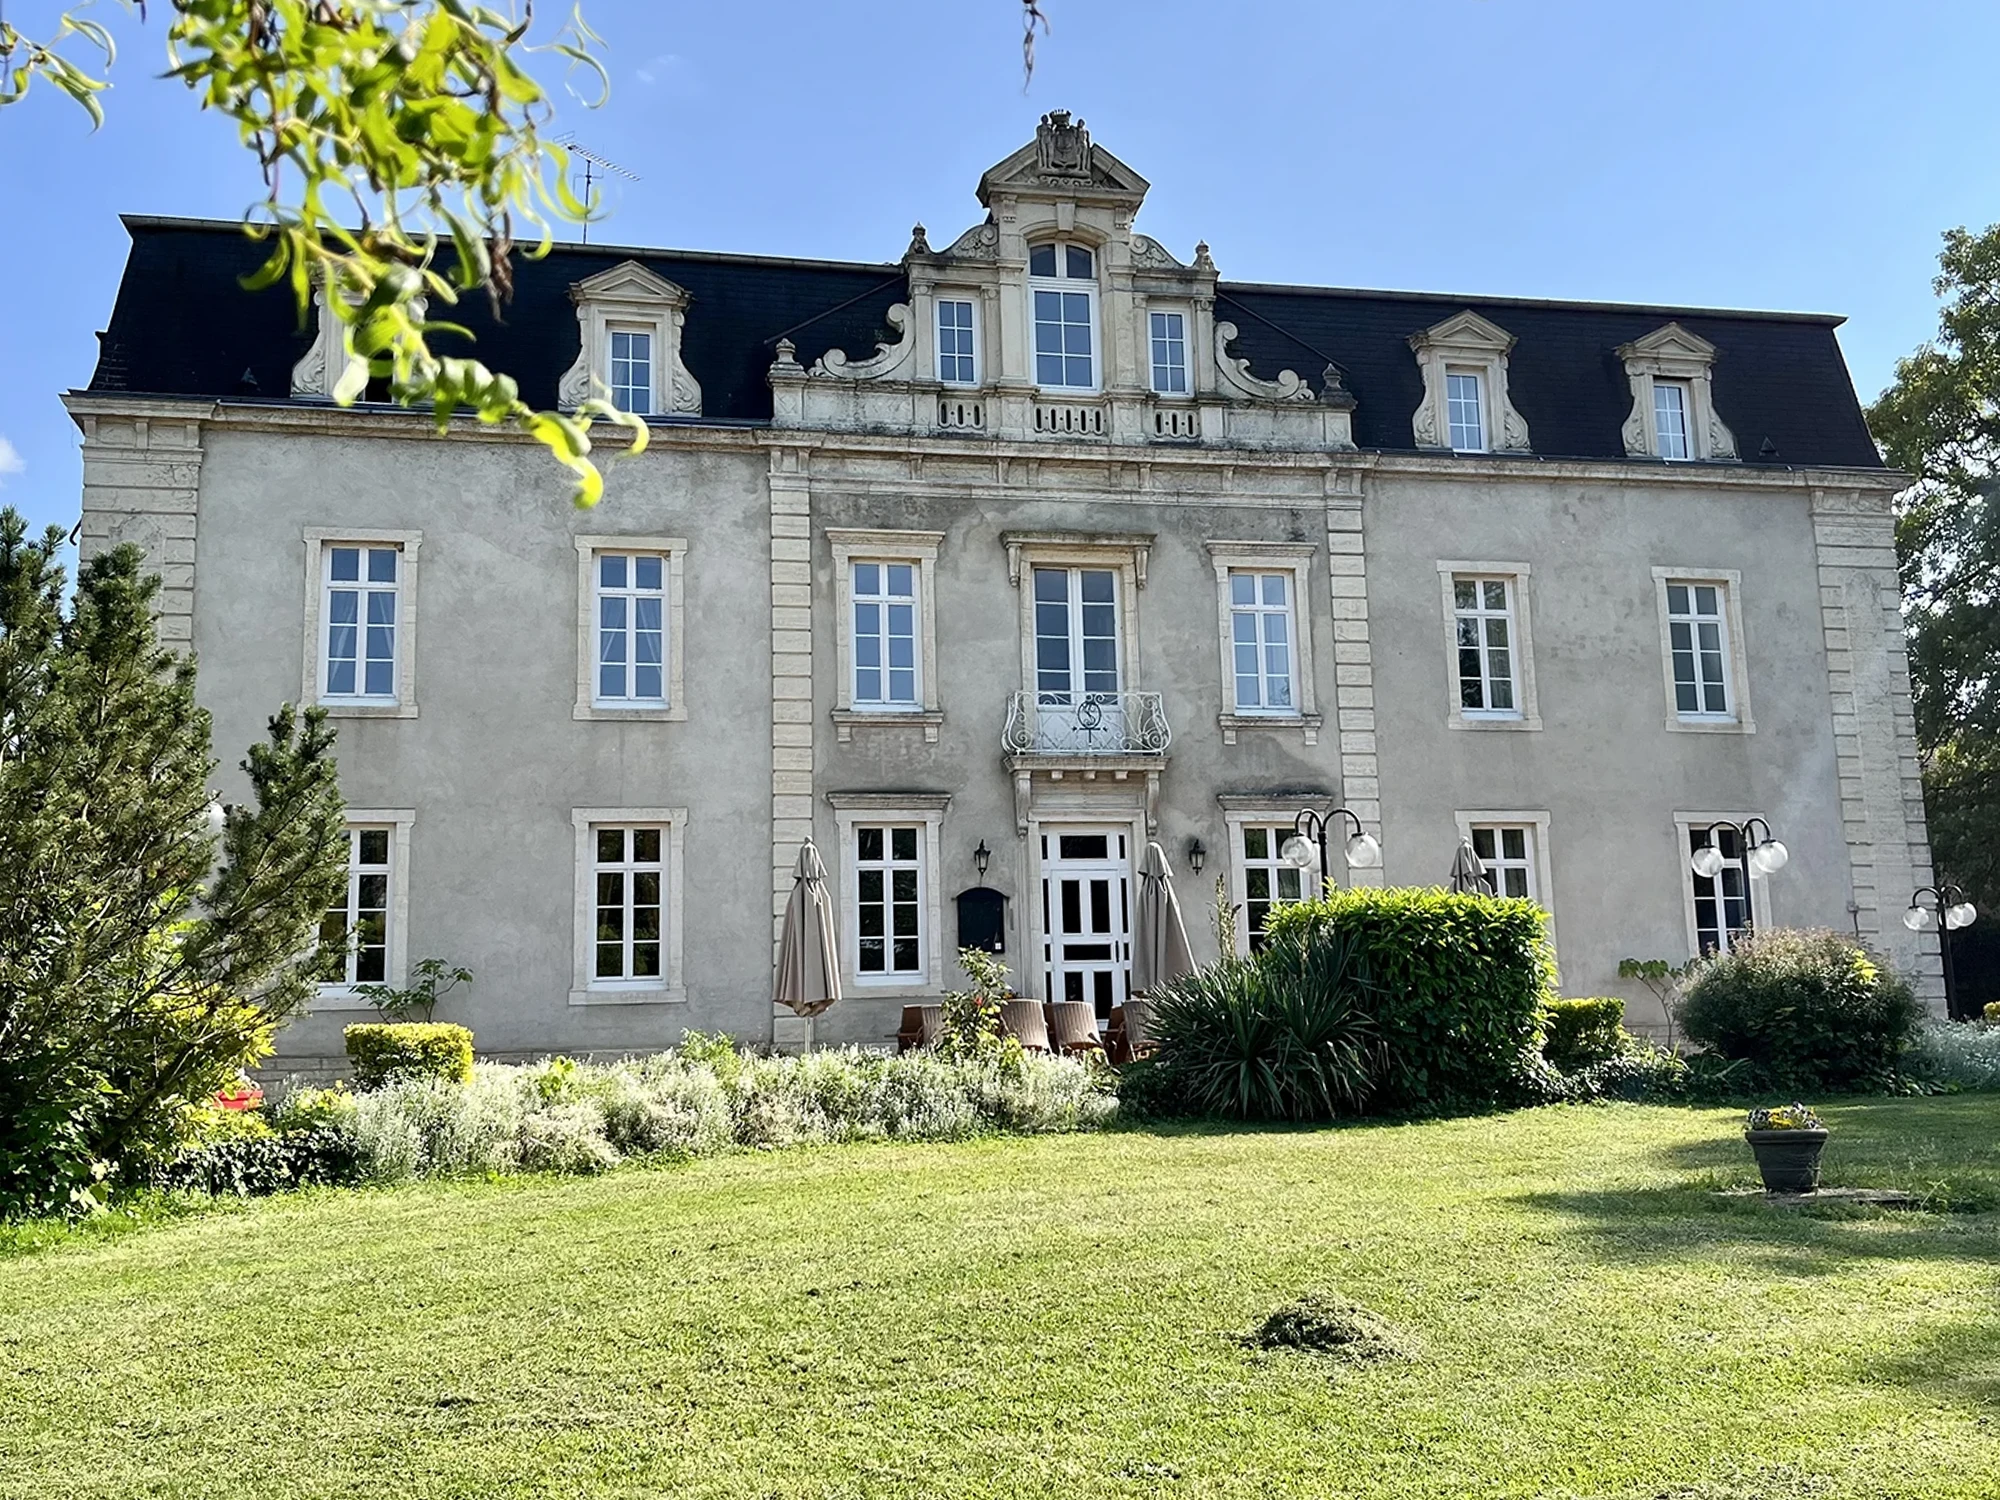 Château de Nantilly